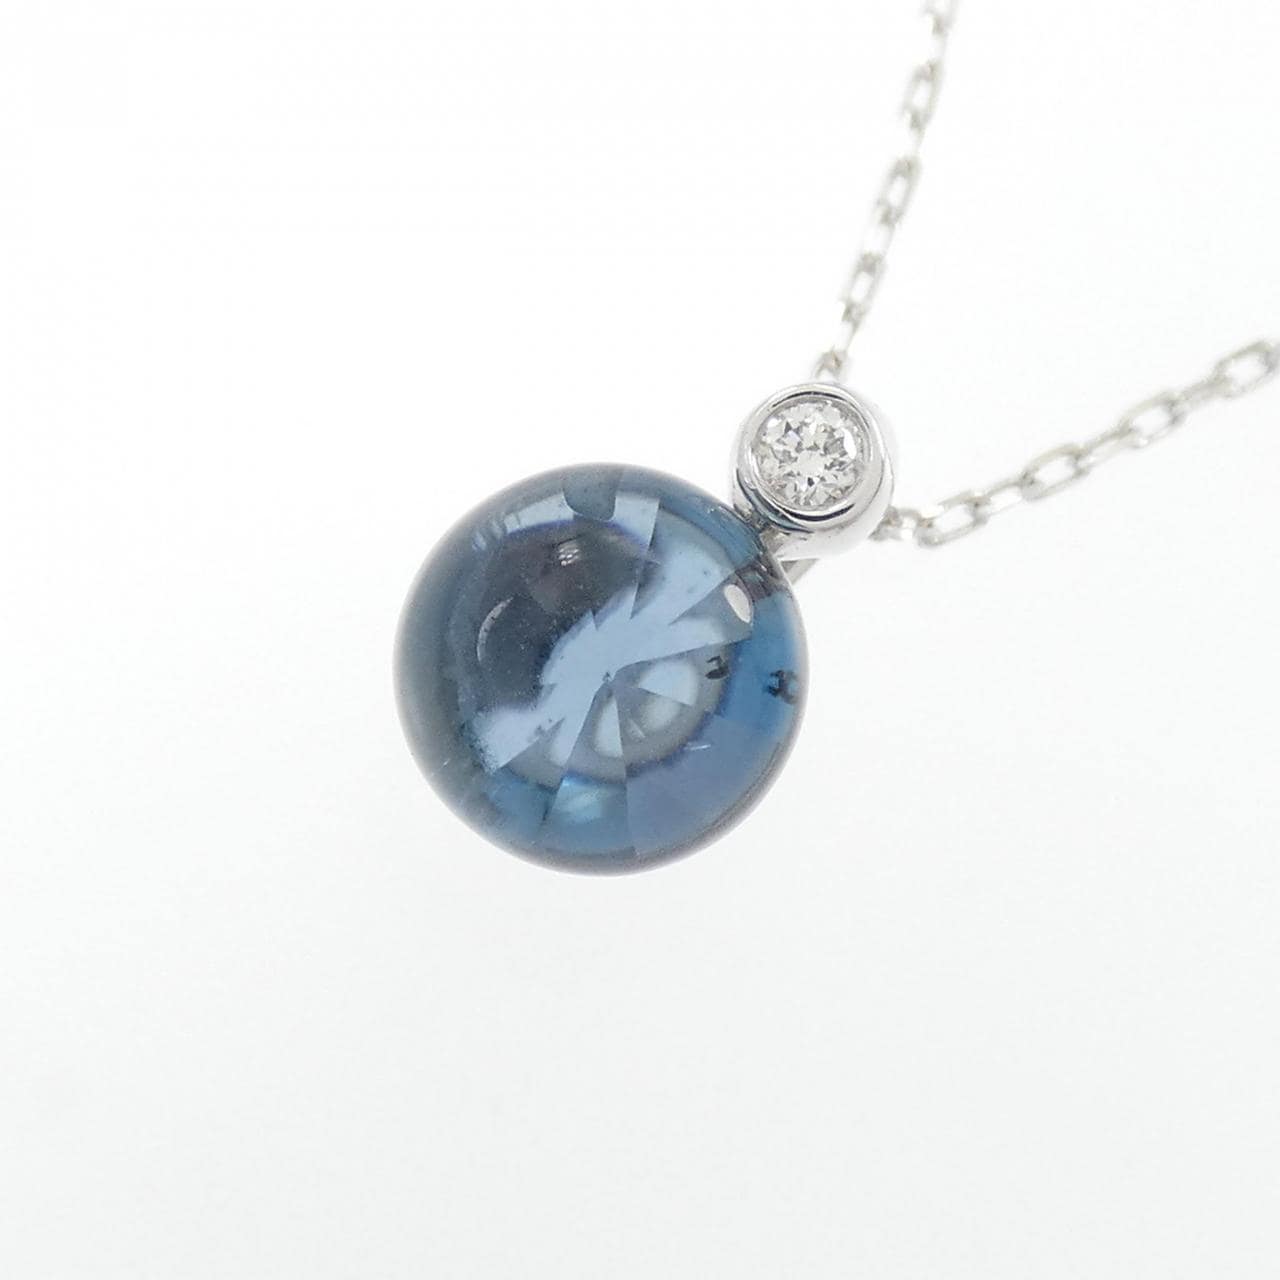 K18WG Blue Topaz Necklace 1.46CT